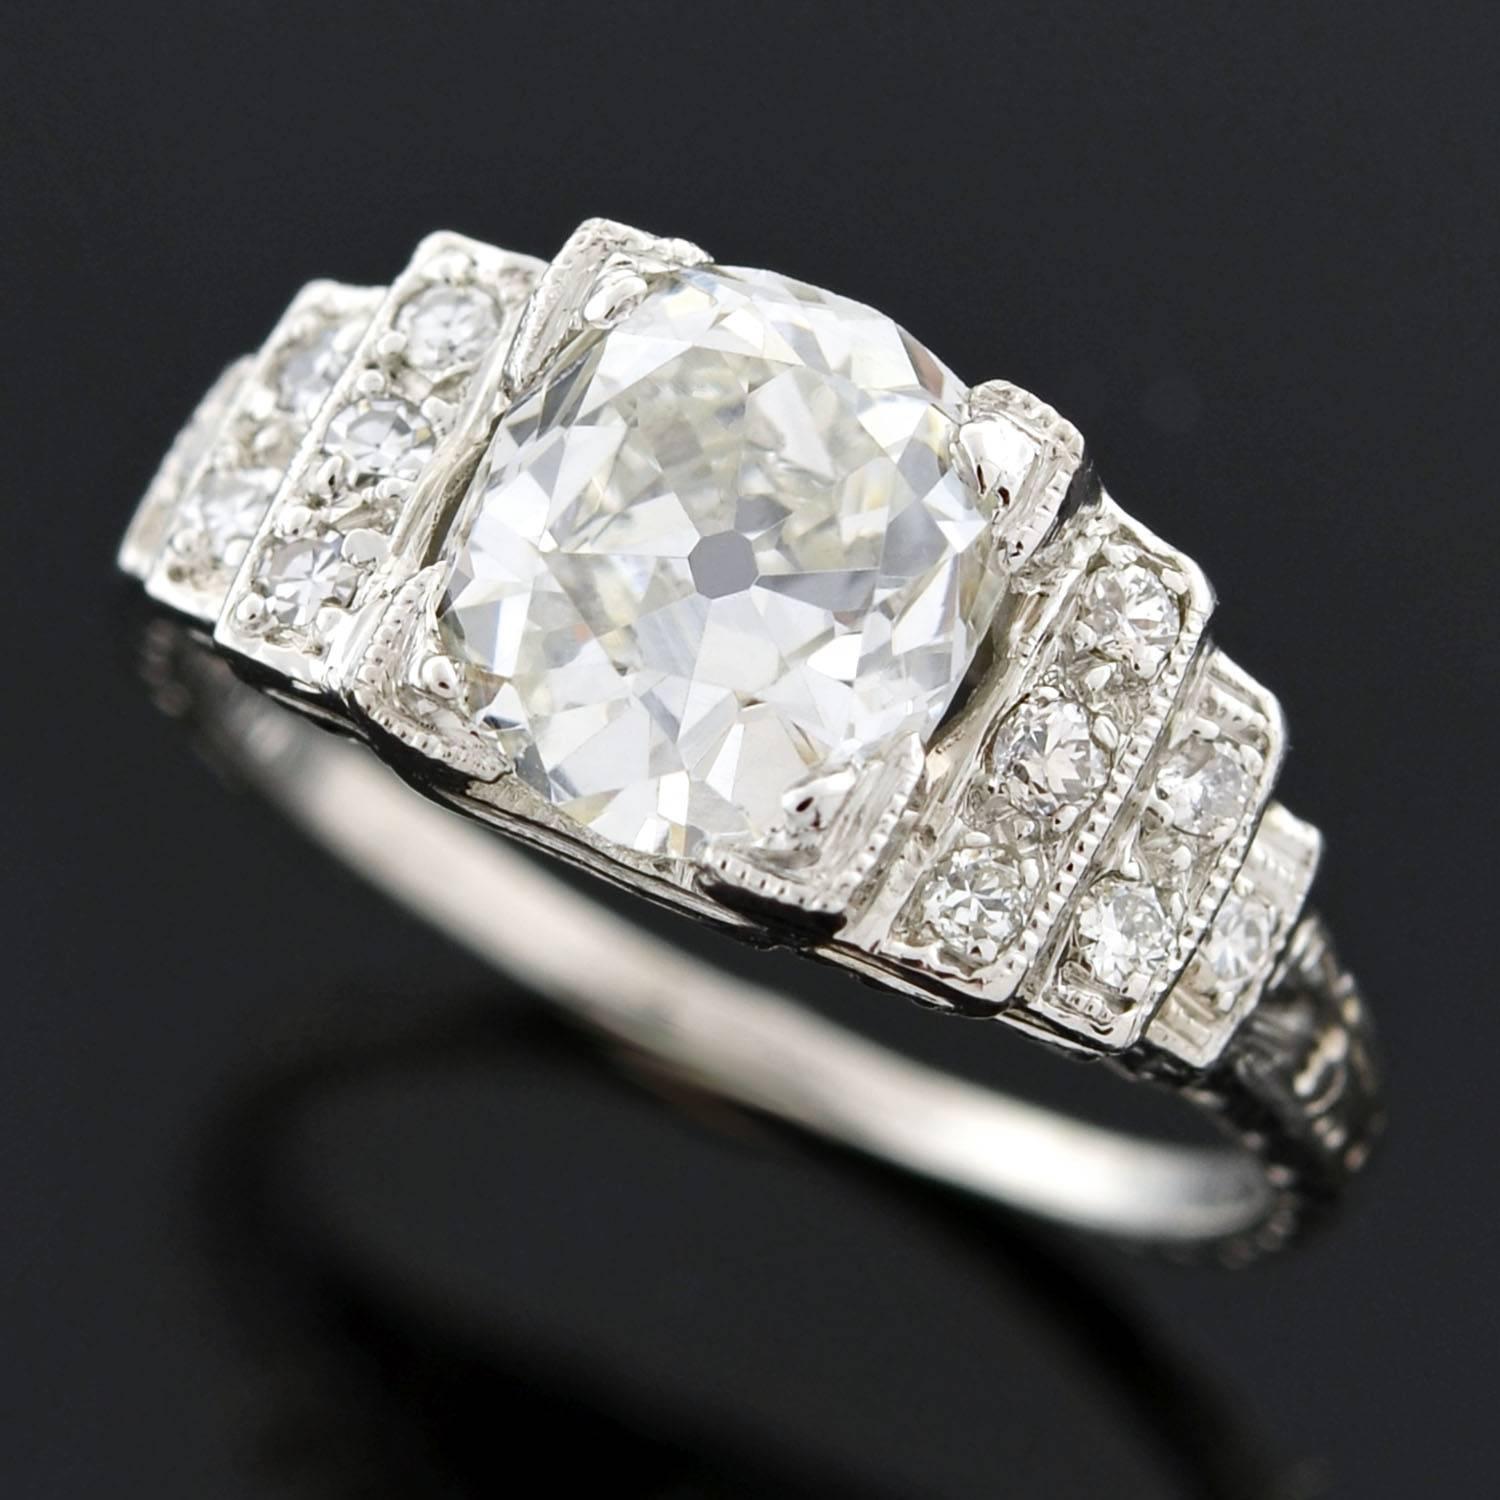 2.16 carat diamond ring